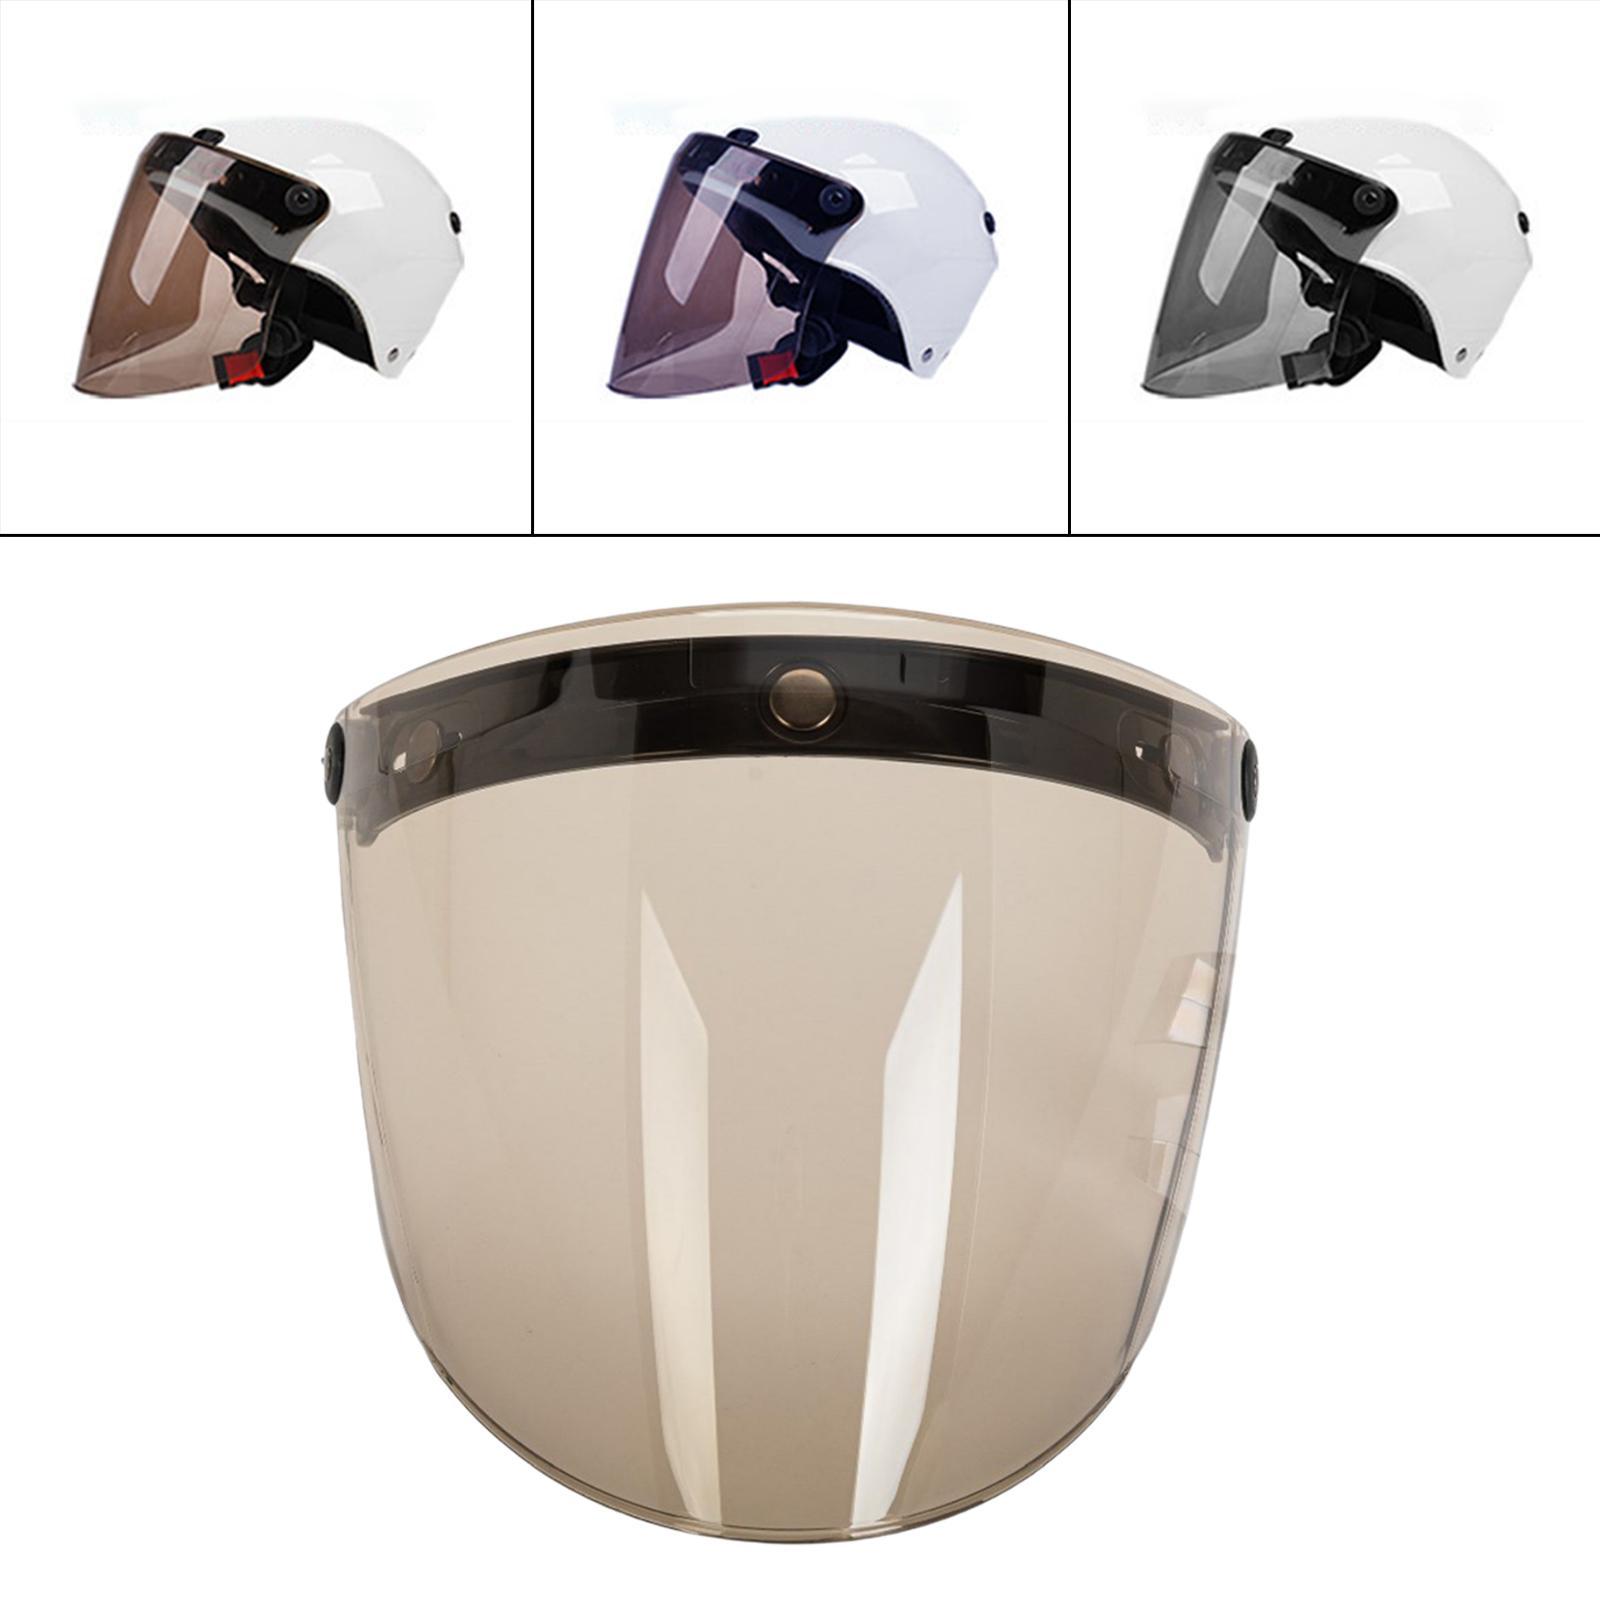 Visor High Strength PC Lens Windproof Sun Shield for 3-Snap Anti-Fog